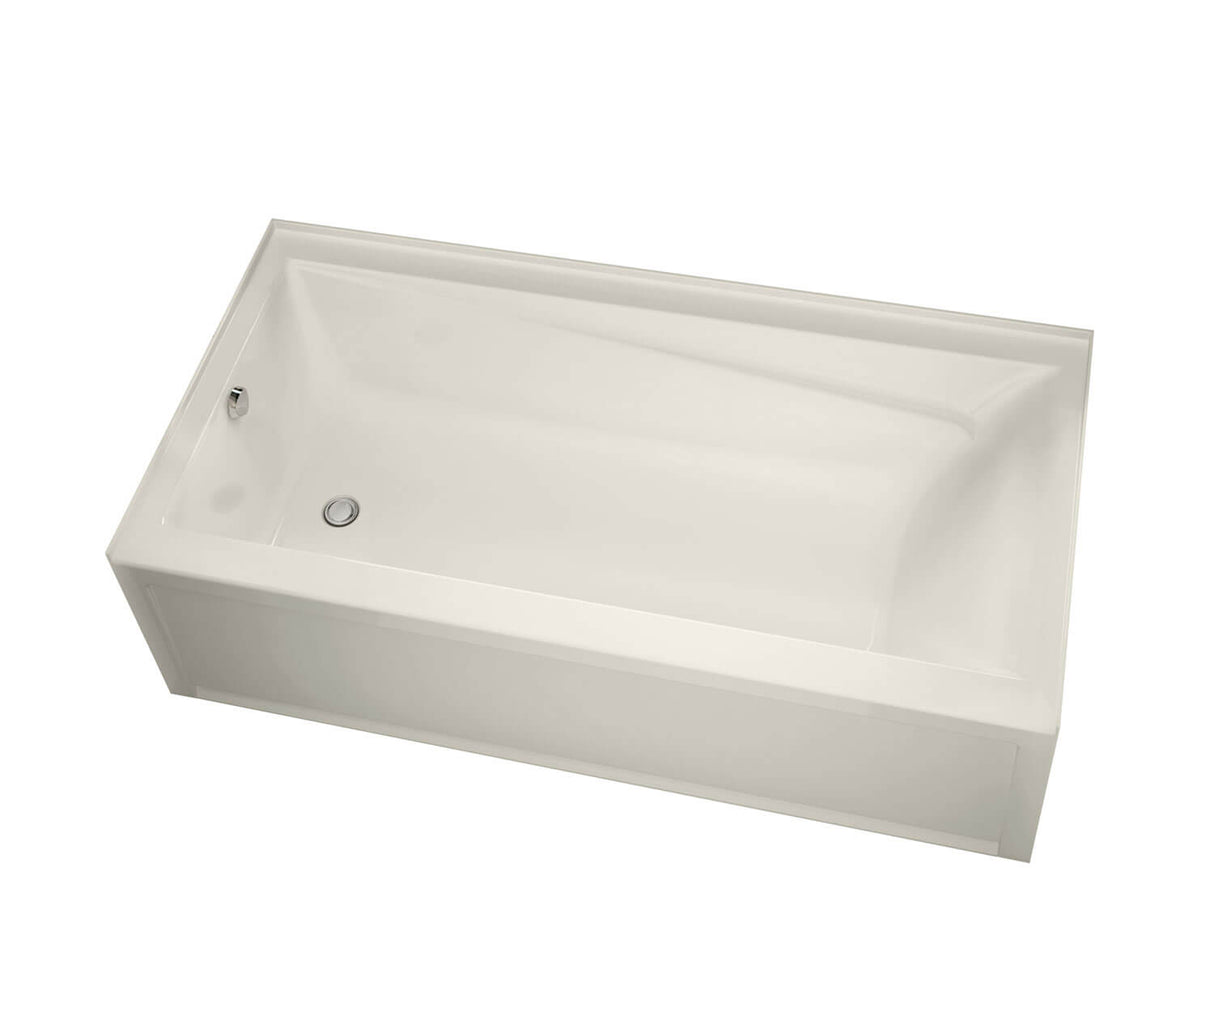 MAAX 105520-003-007-100 Exhibit 6032 IFS Acrylic Alcove Left-Hand Drain Whirlpool Bathtub in Biscuit